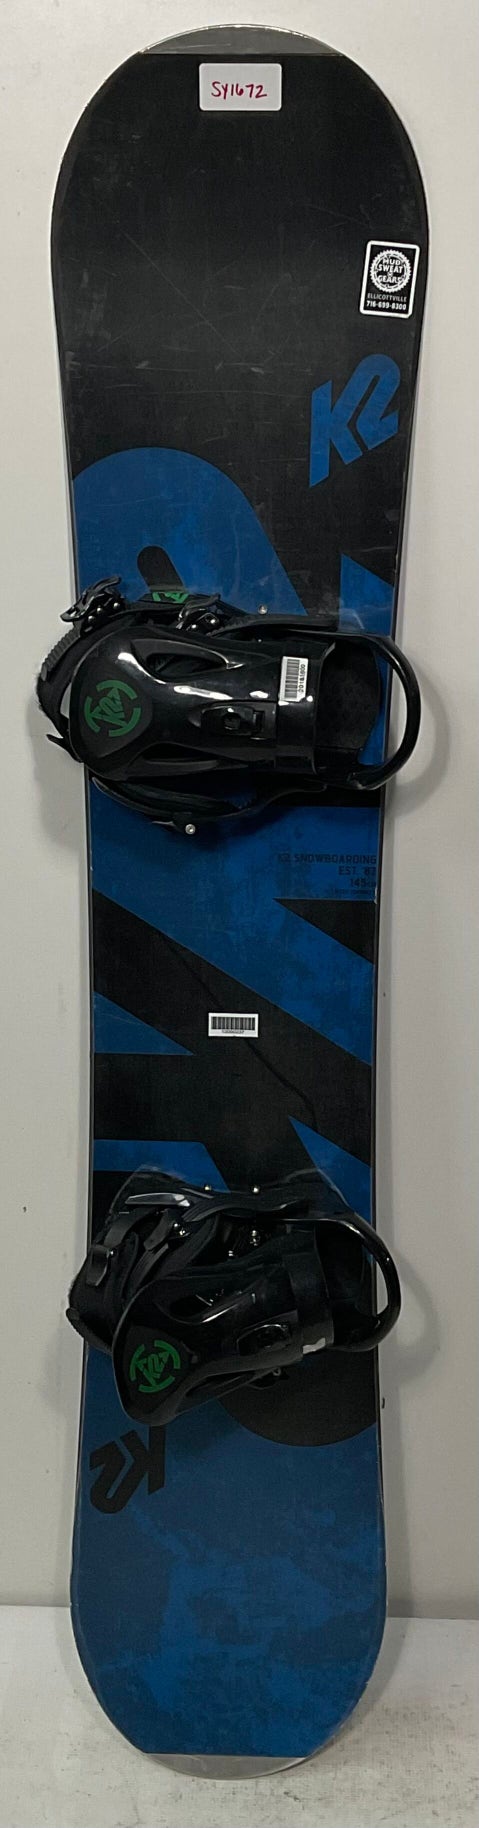 Used K2 145cm Snowboard With K2 Bindings (SY1672)